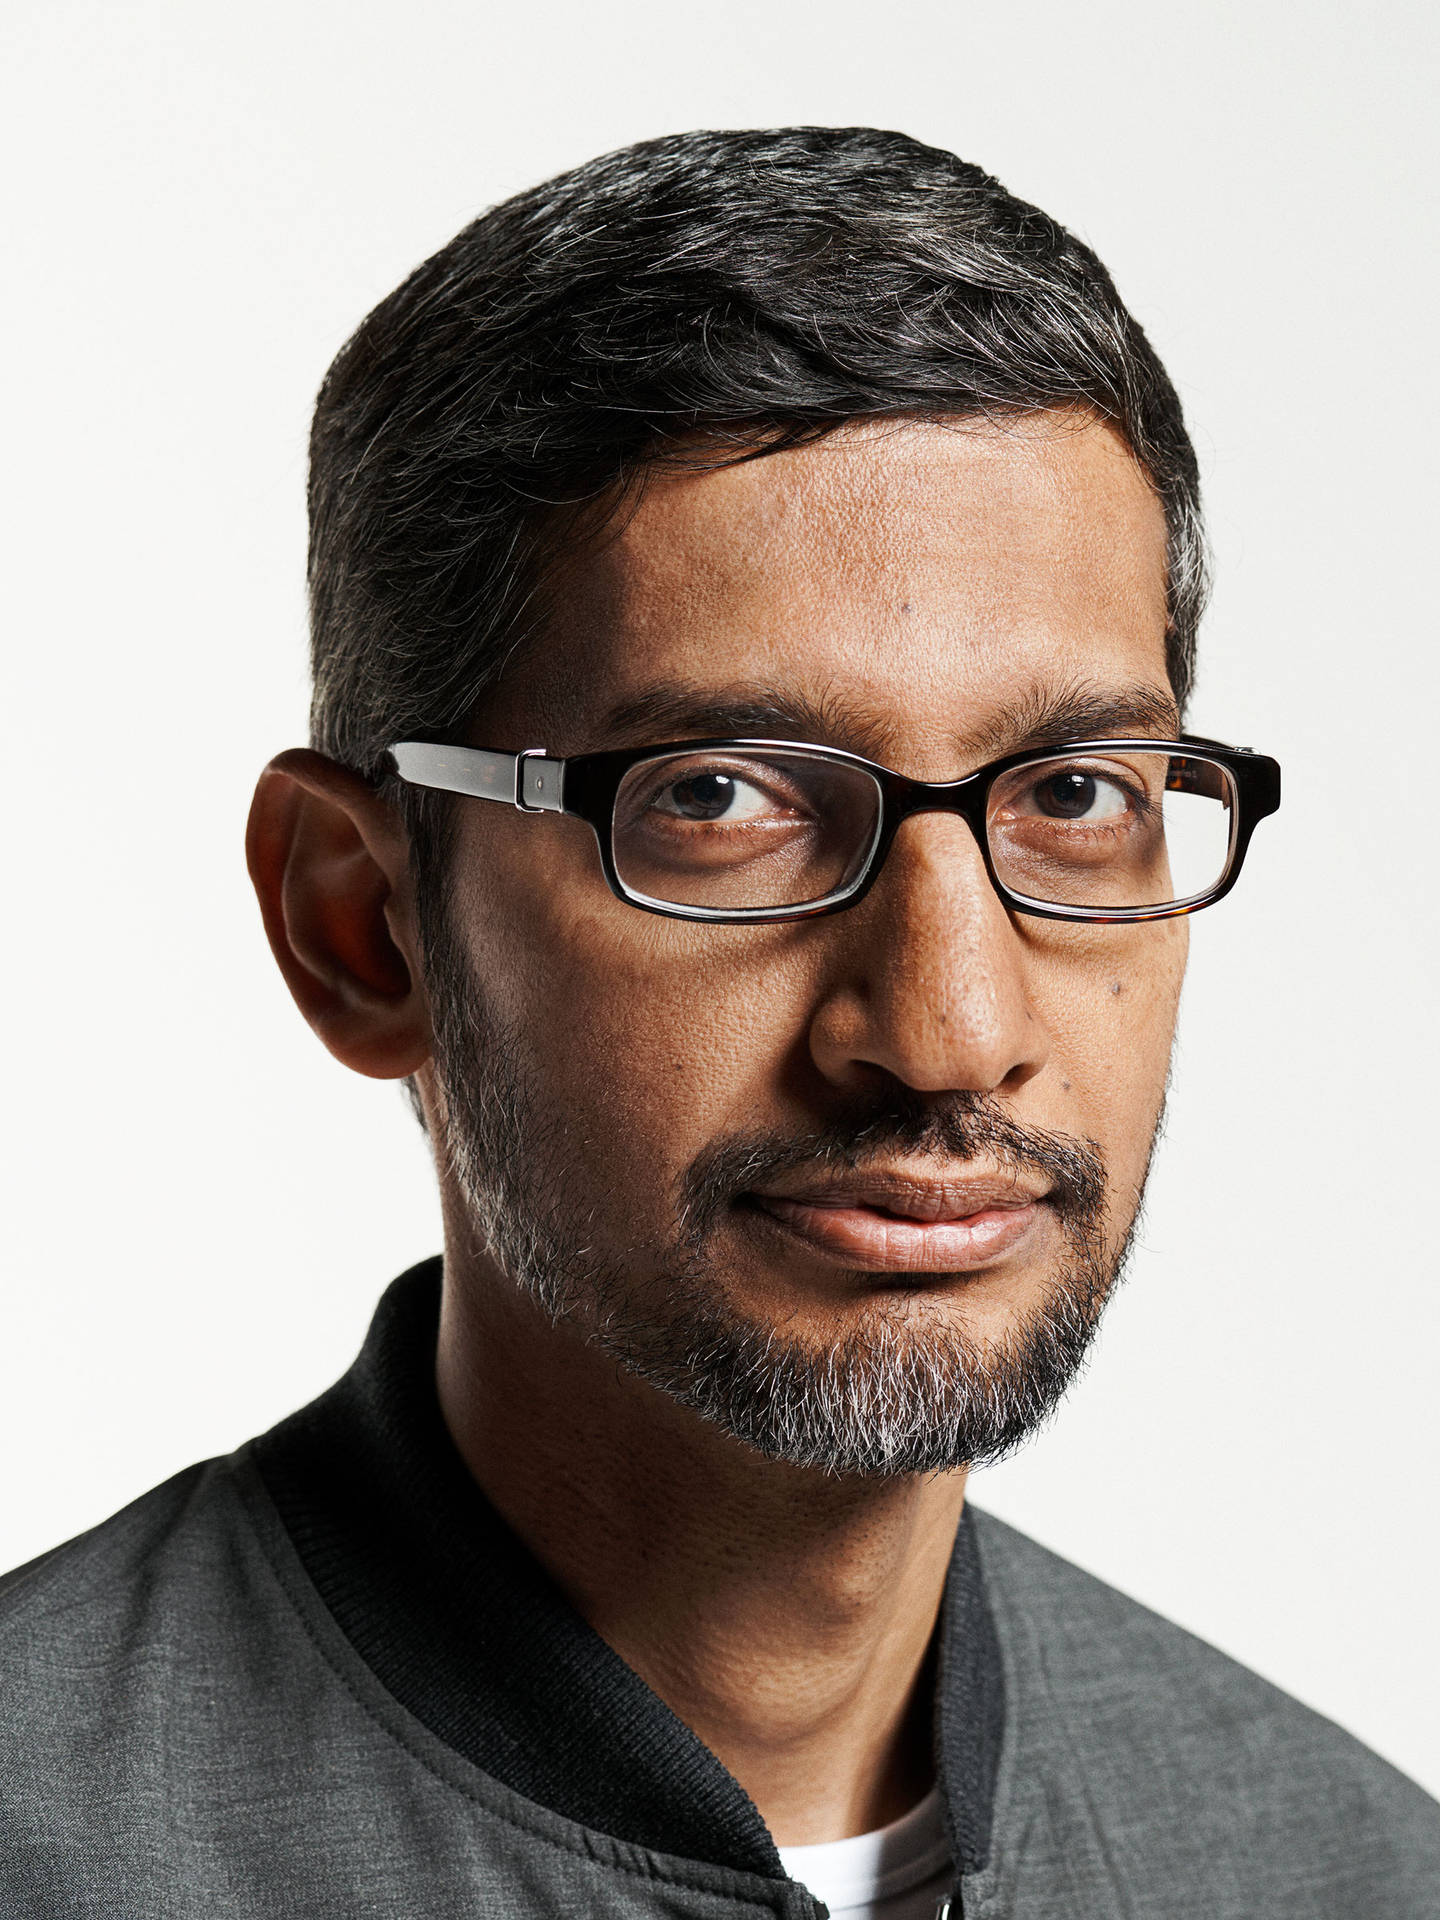 Google Chief Executive Officer Sundar Pichai Wallpaper